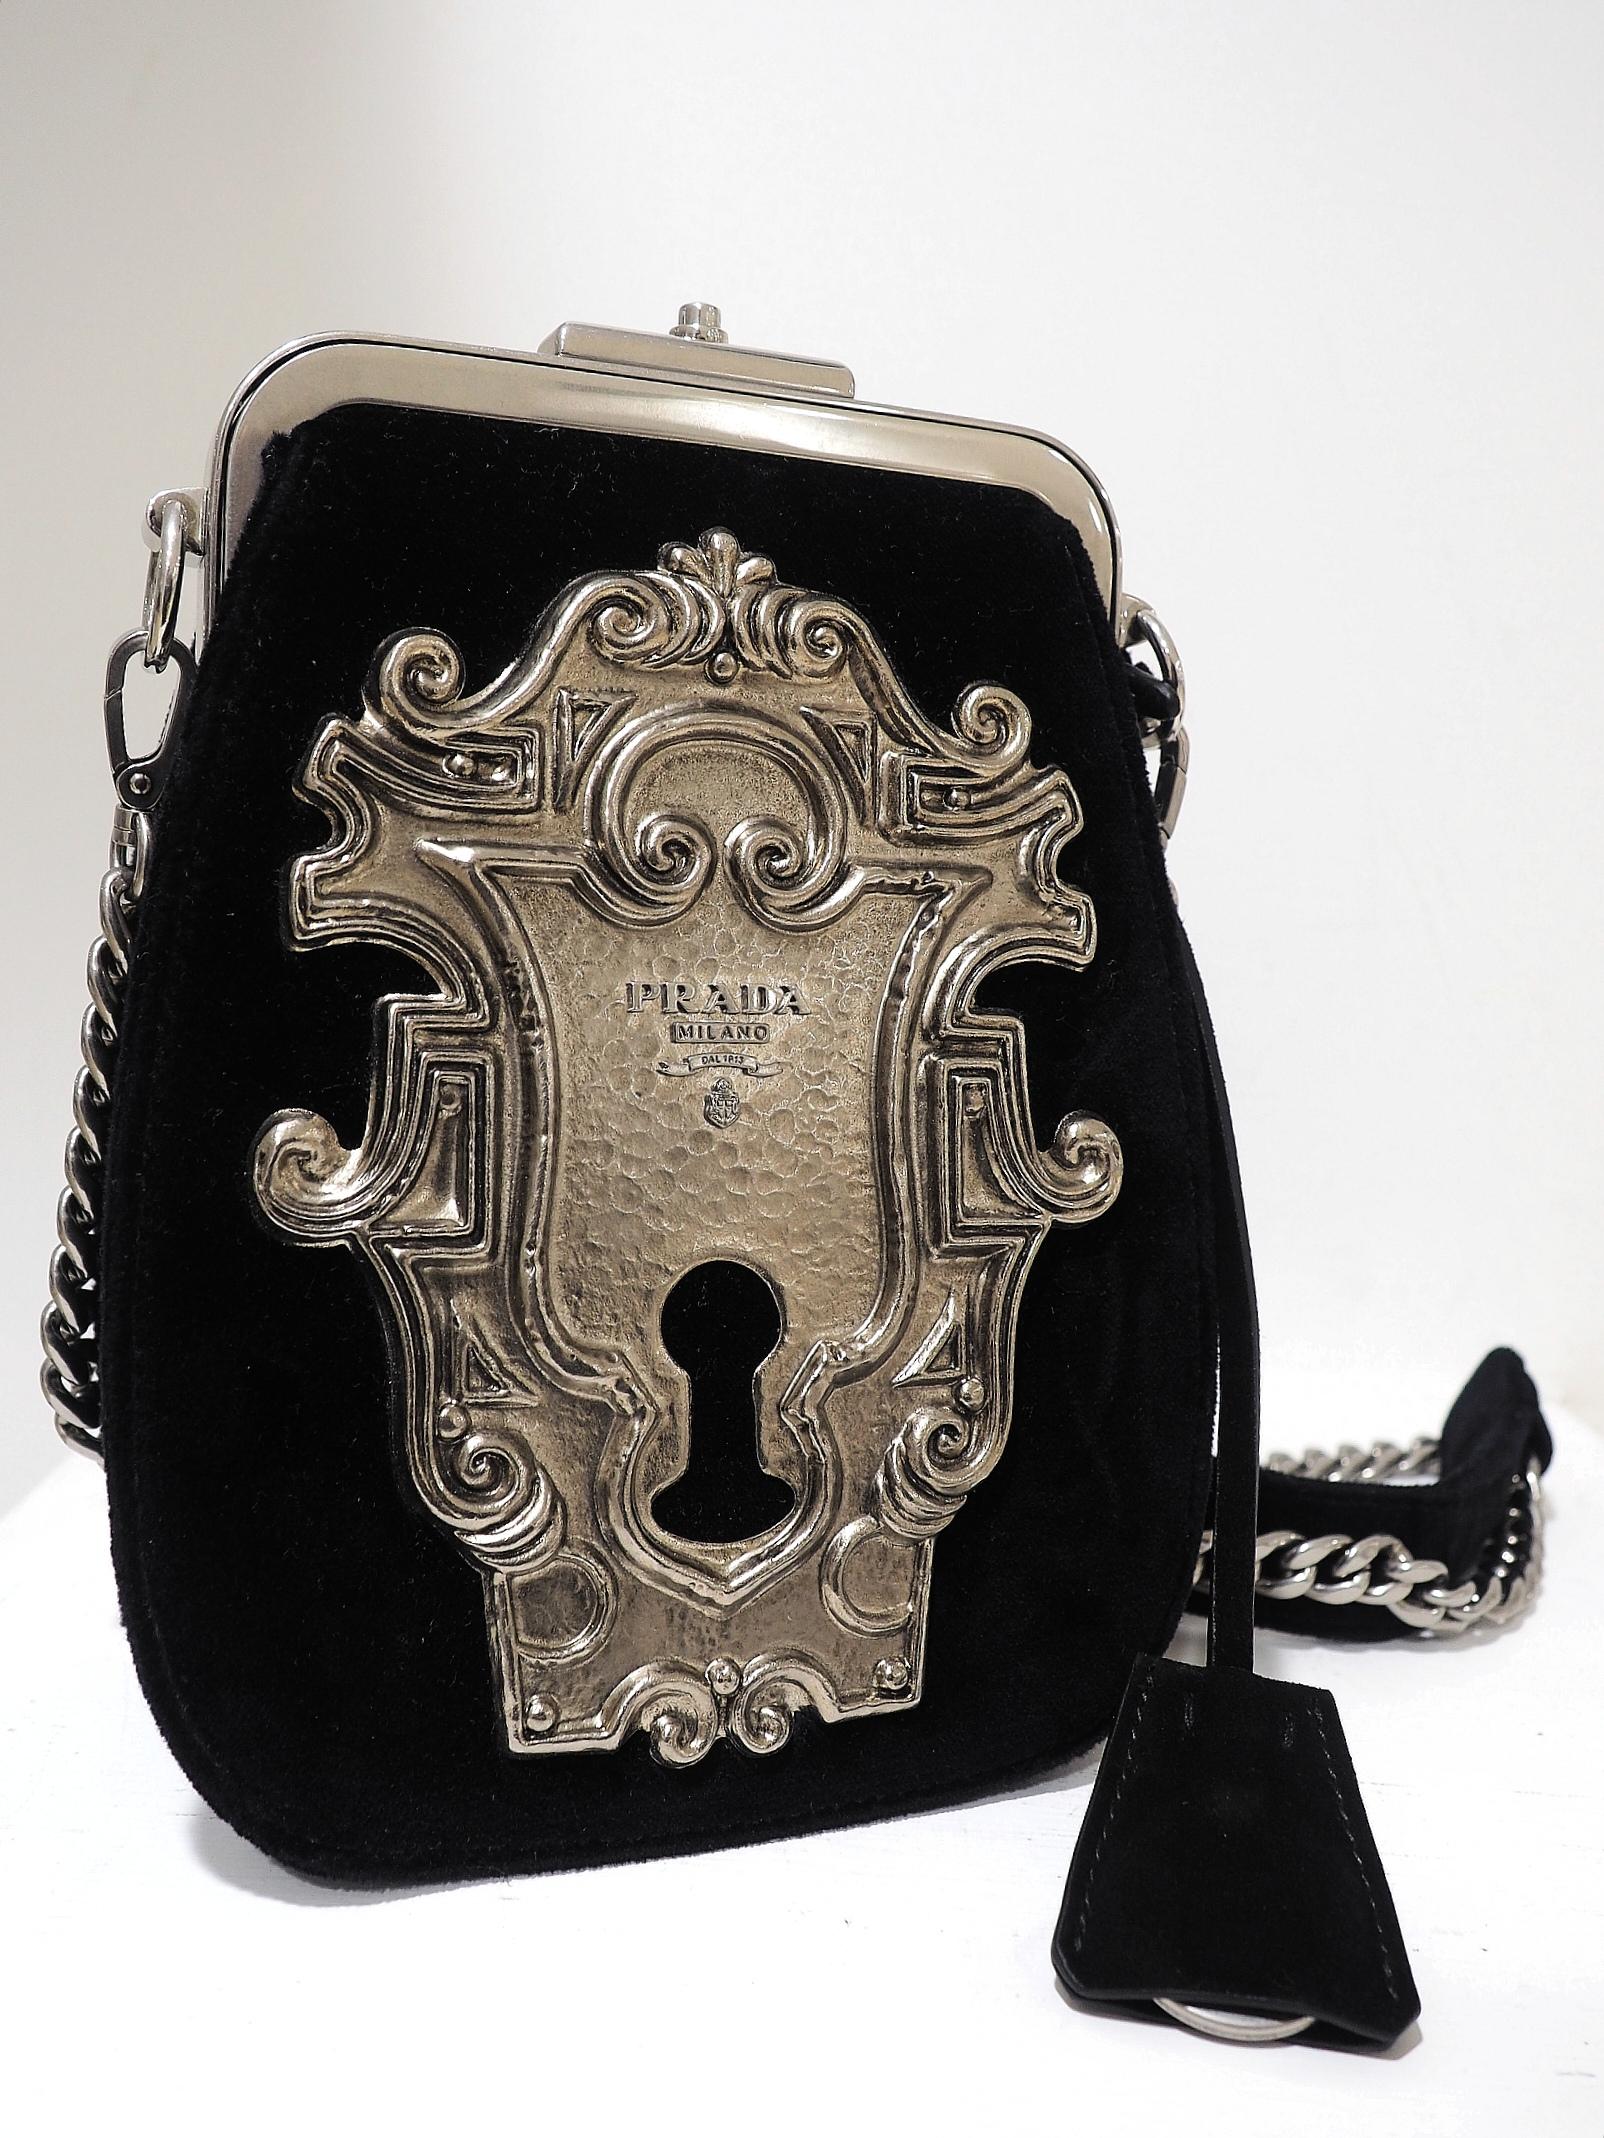 Straight from the catwalk. Prada velvet and velvet lock purse. With dustbag and tags Retail price 2.6k
Alt. 20cm larg. 15cm prof. 7cm